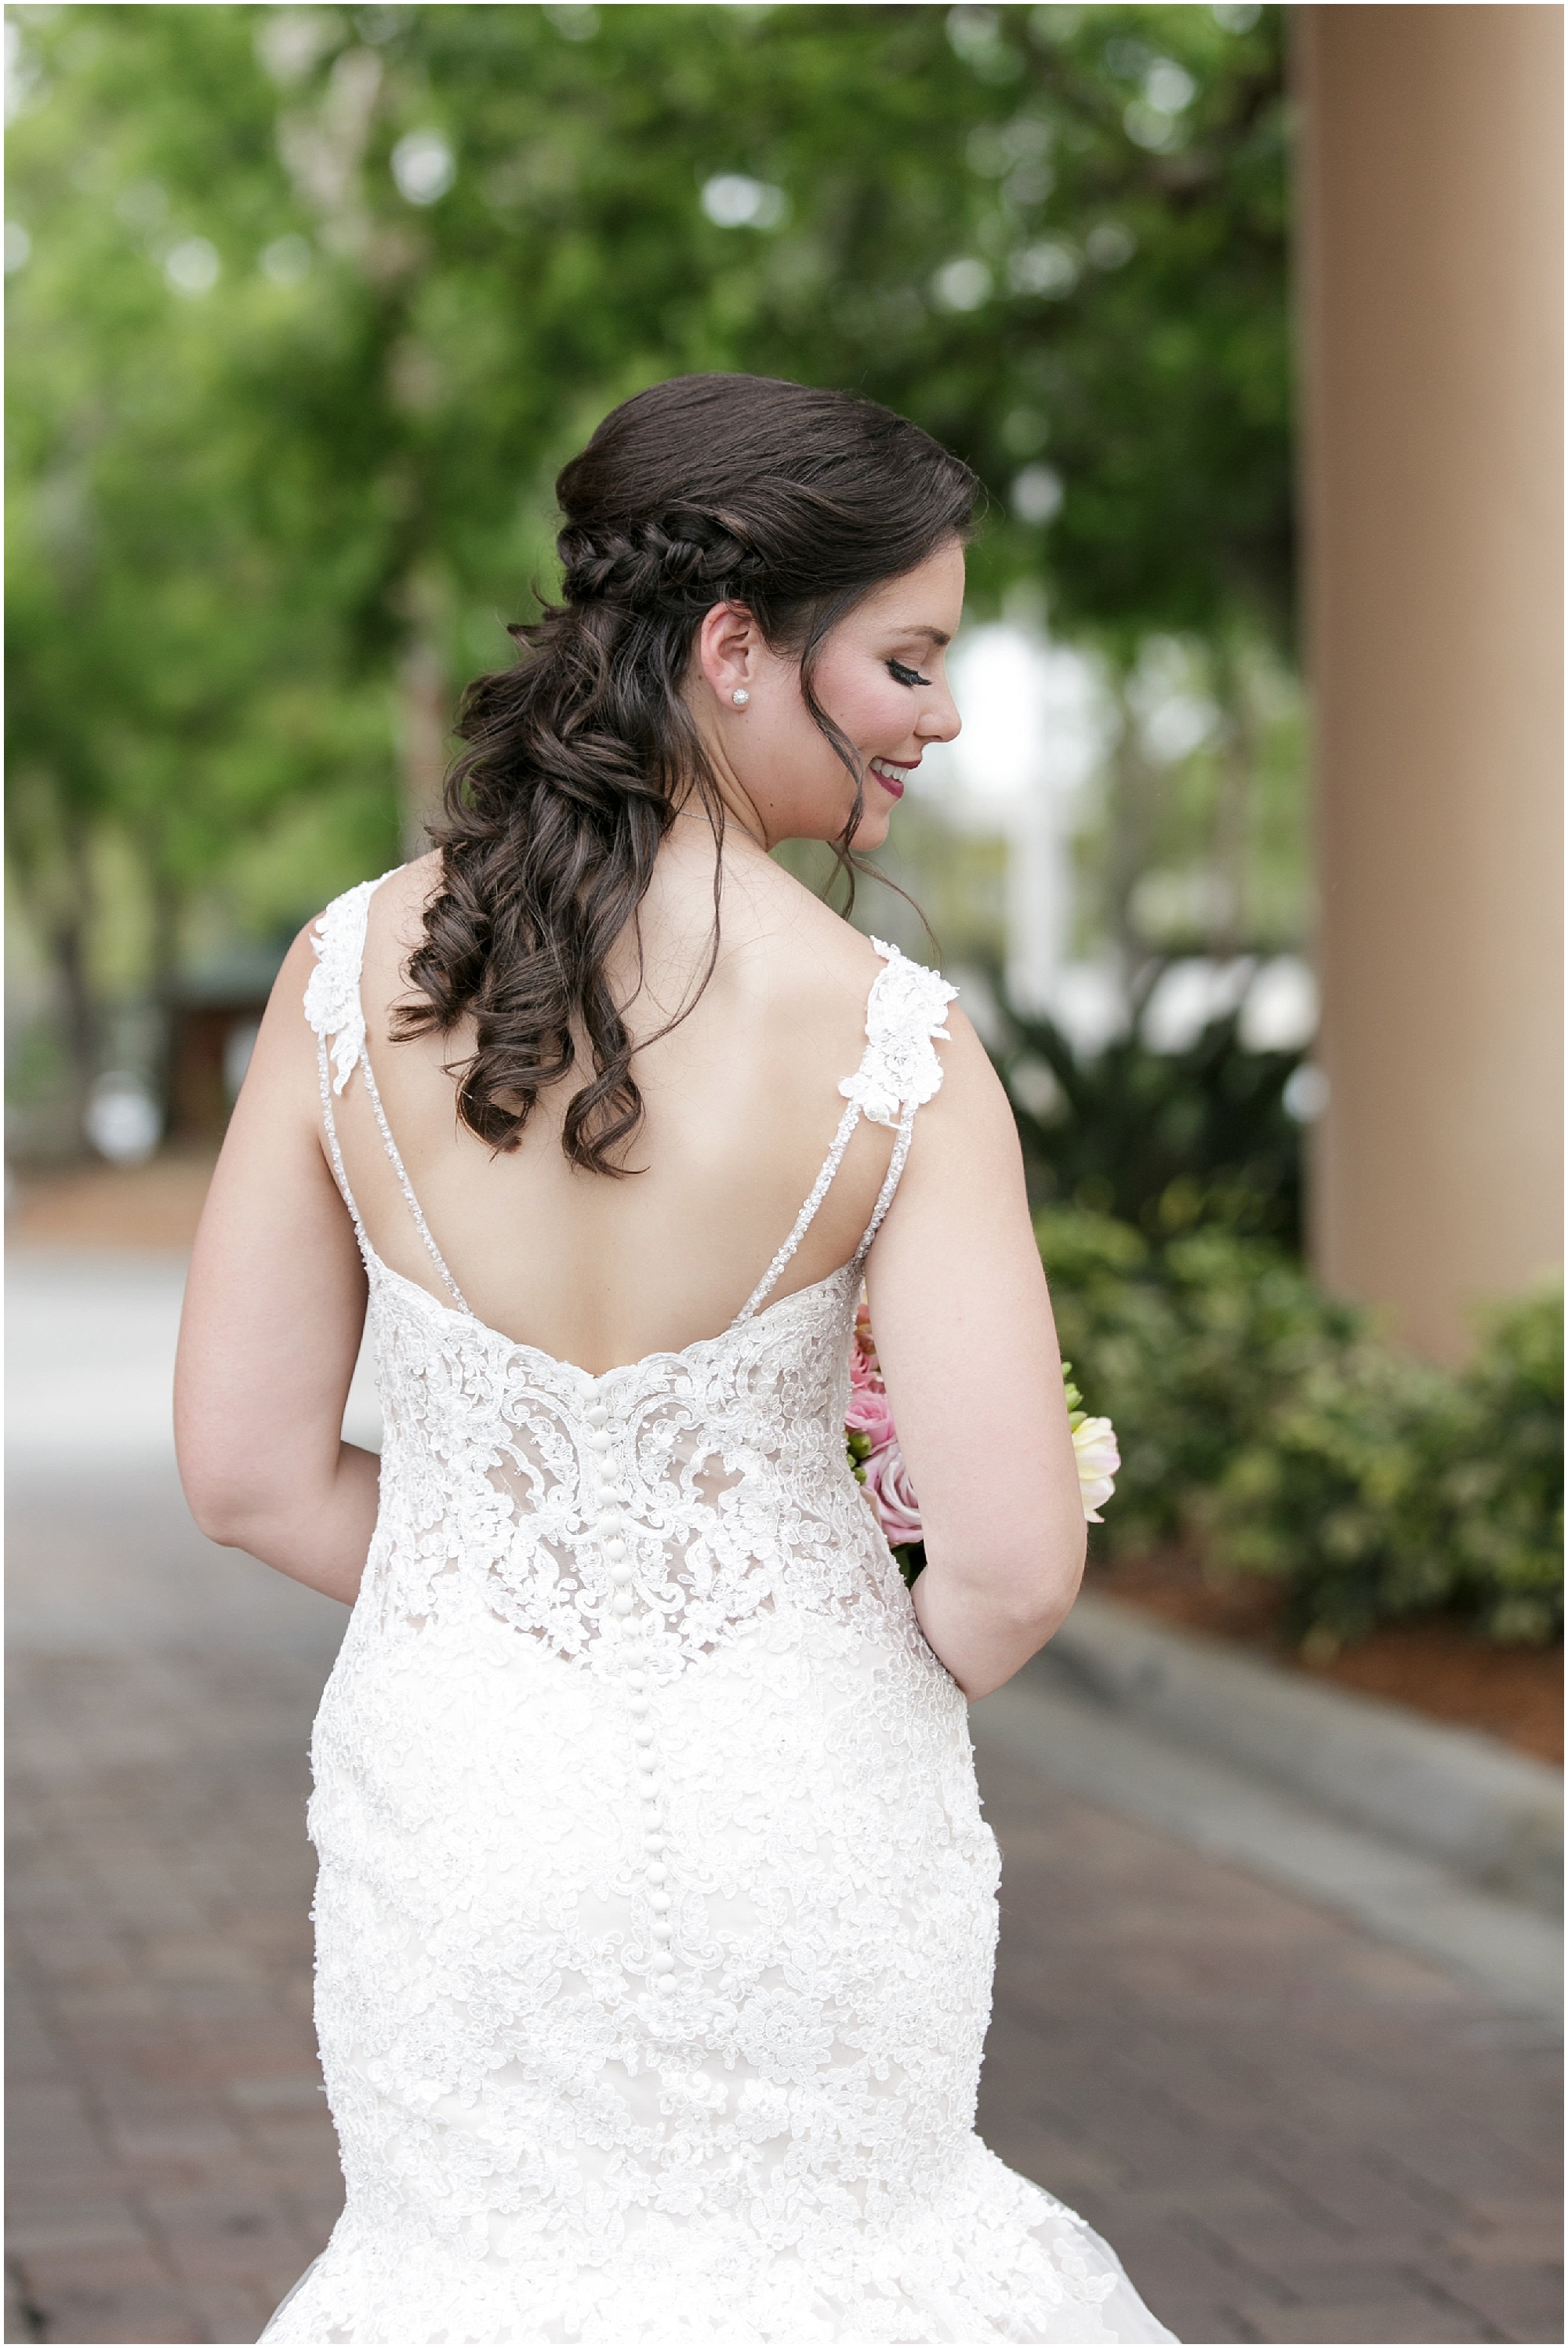 Bride showing off the back details of her wedding dress.